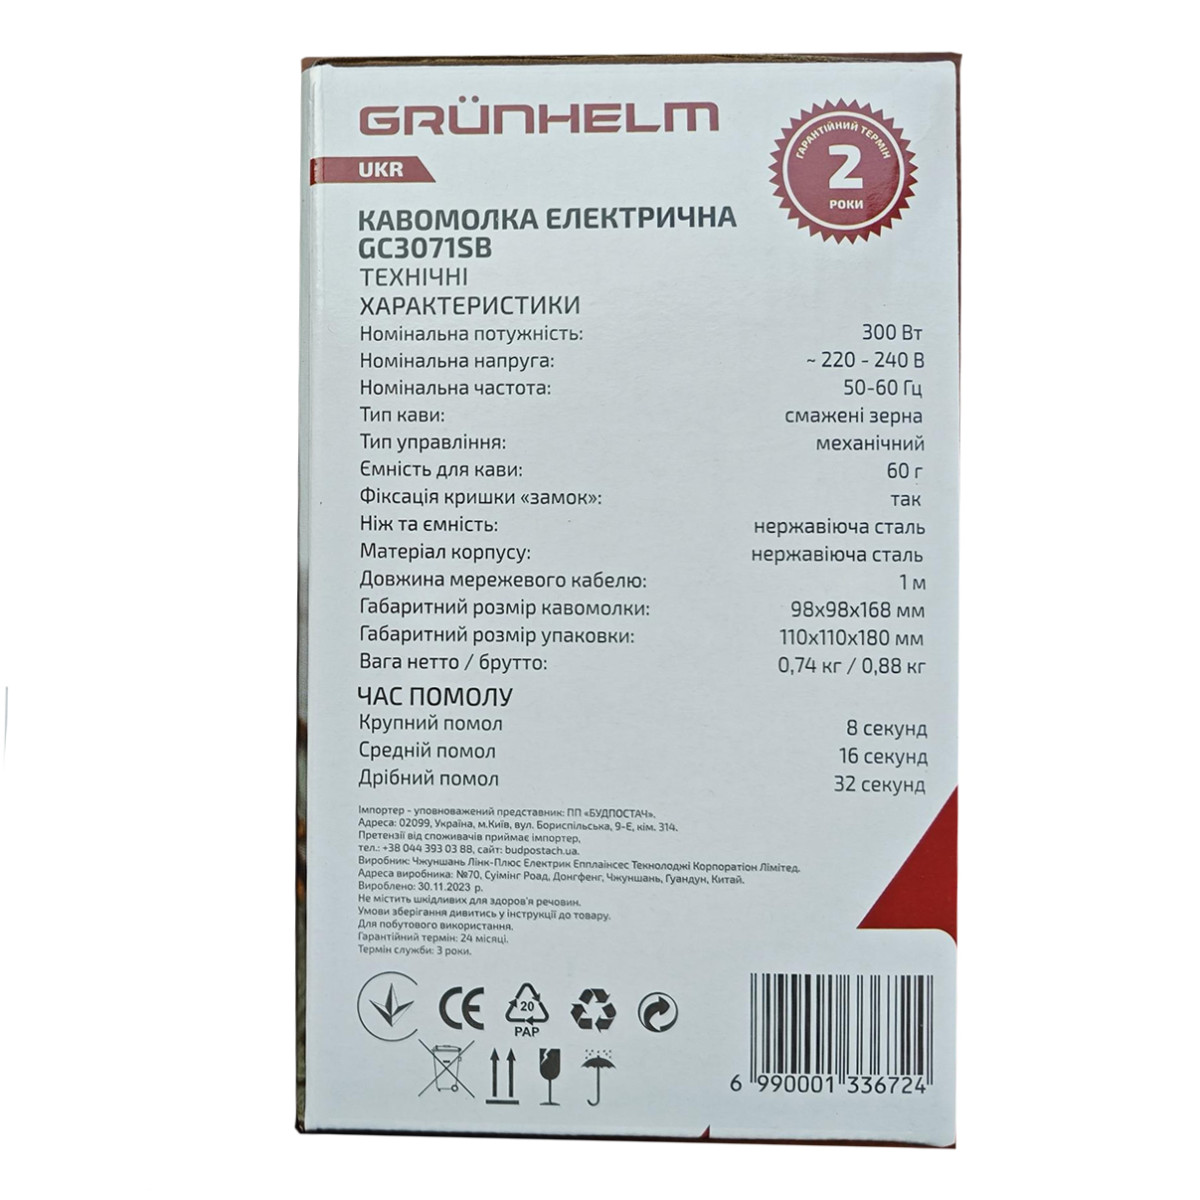 Кавомолка GС-3071SB Grunhelm